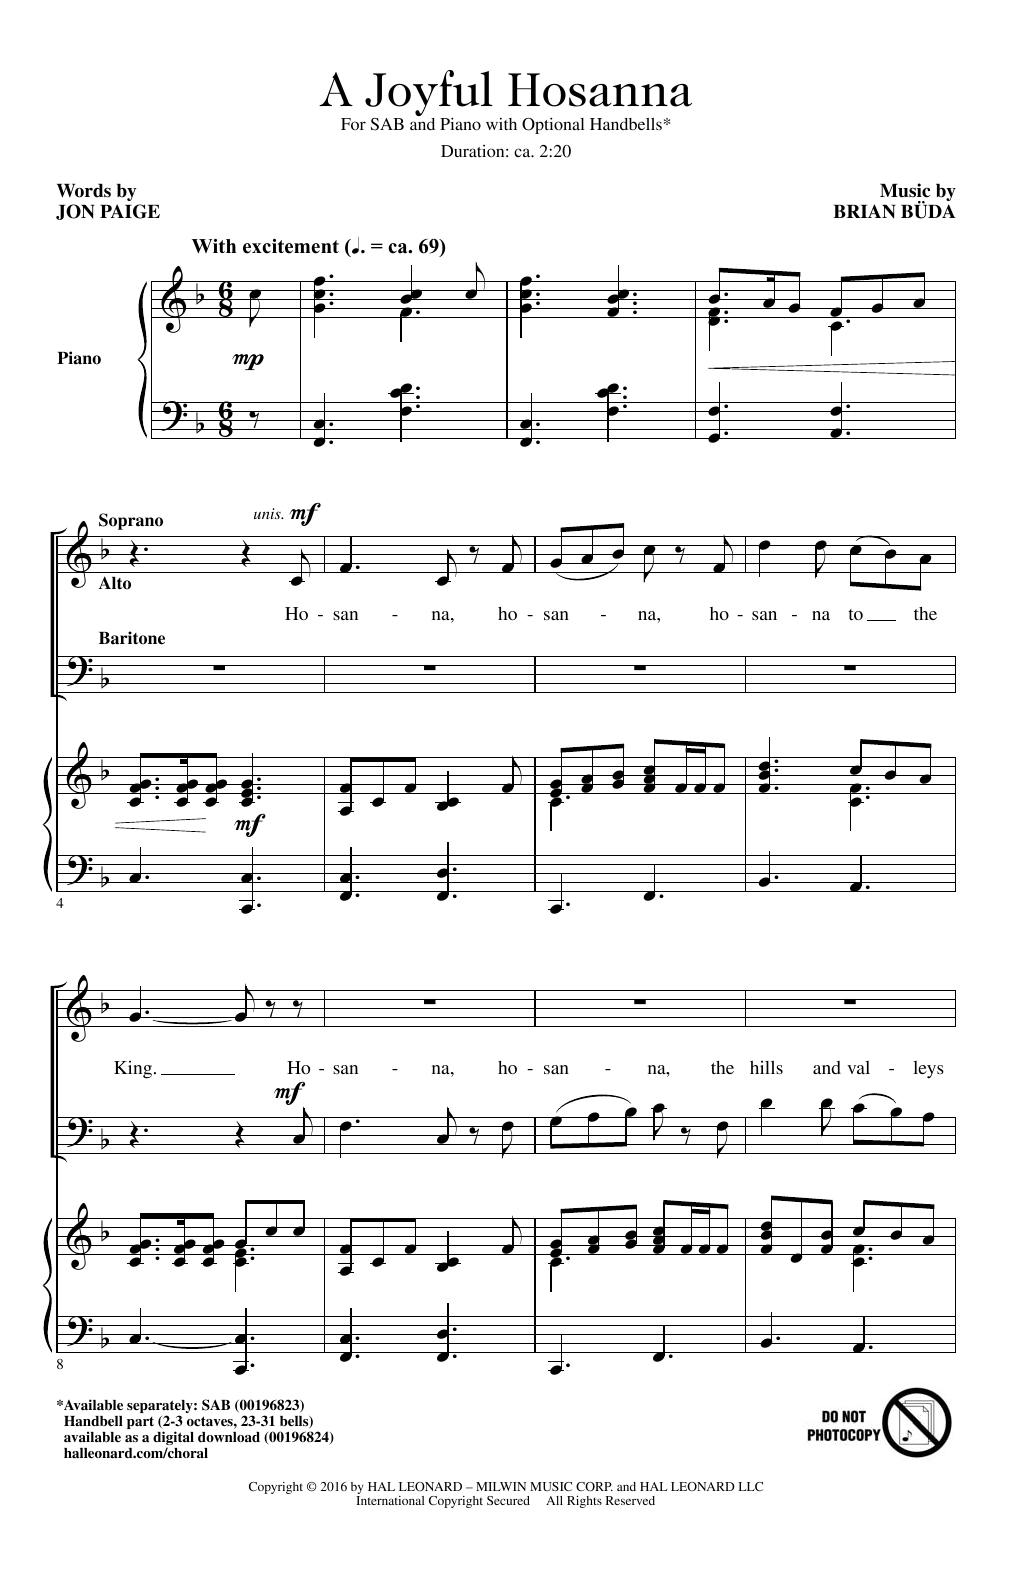 Download Brian Buda A Joyful Hosanna Sheet Music and learn how to play SAB PDF digital score in minutes